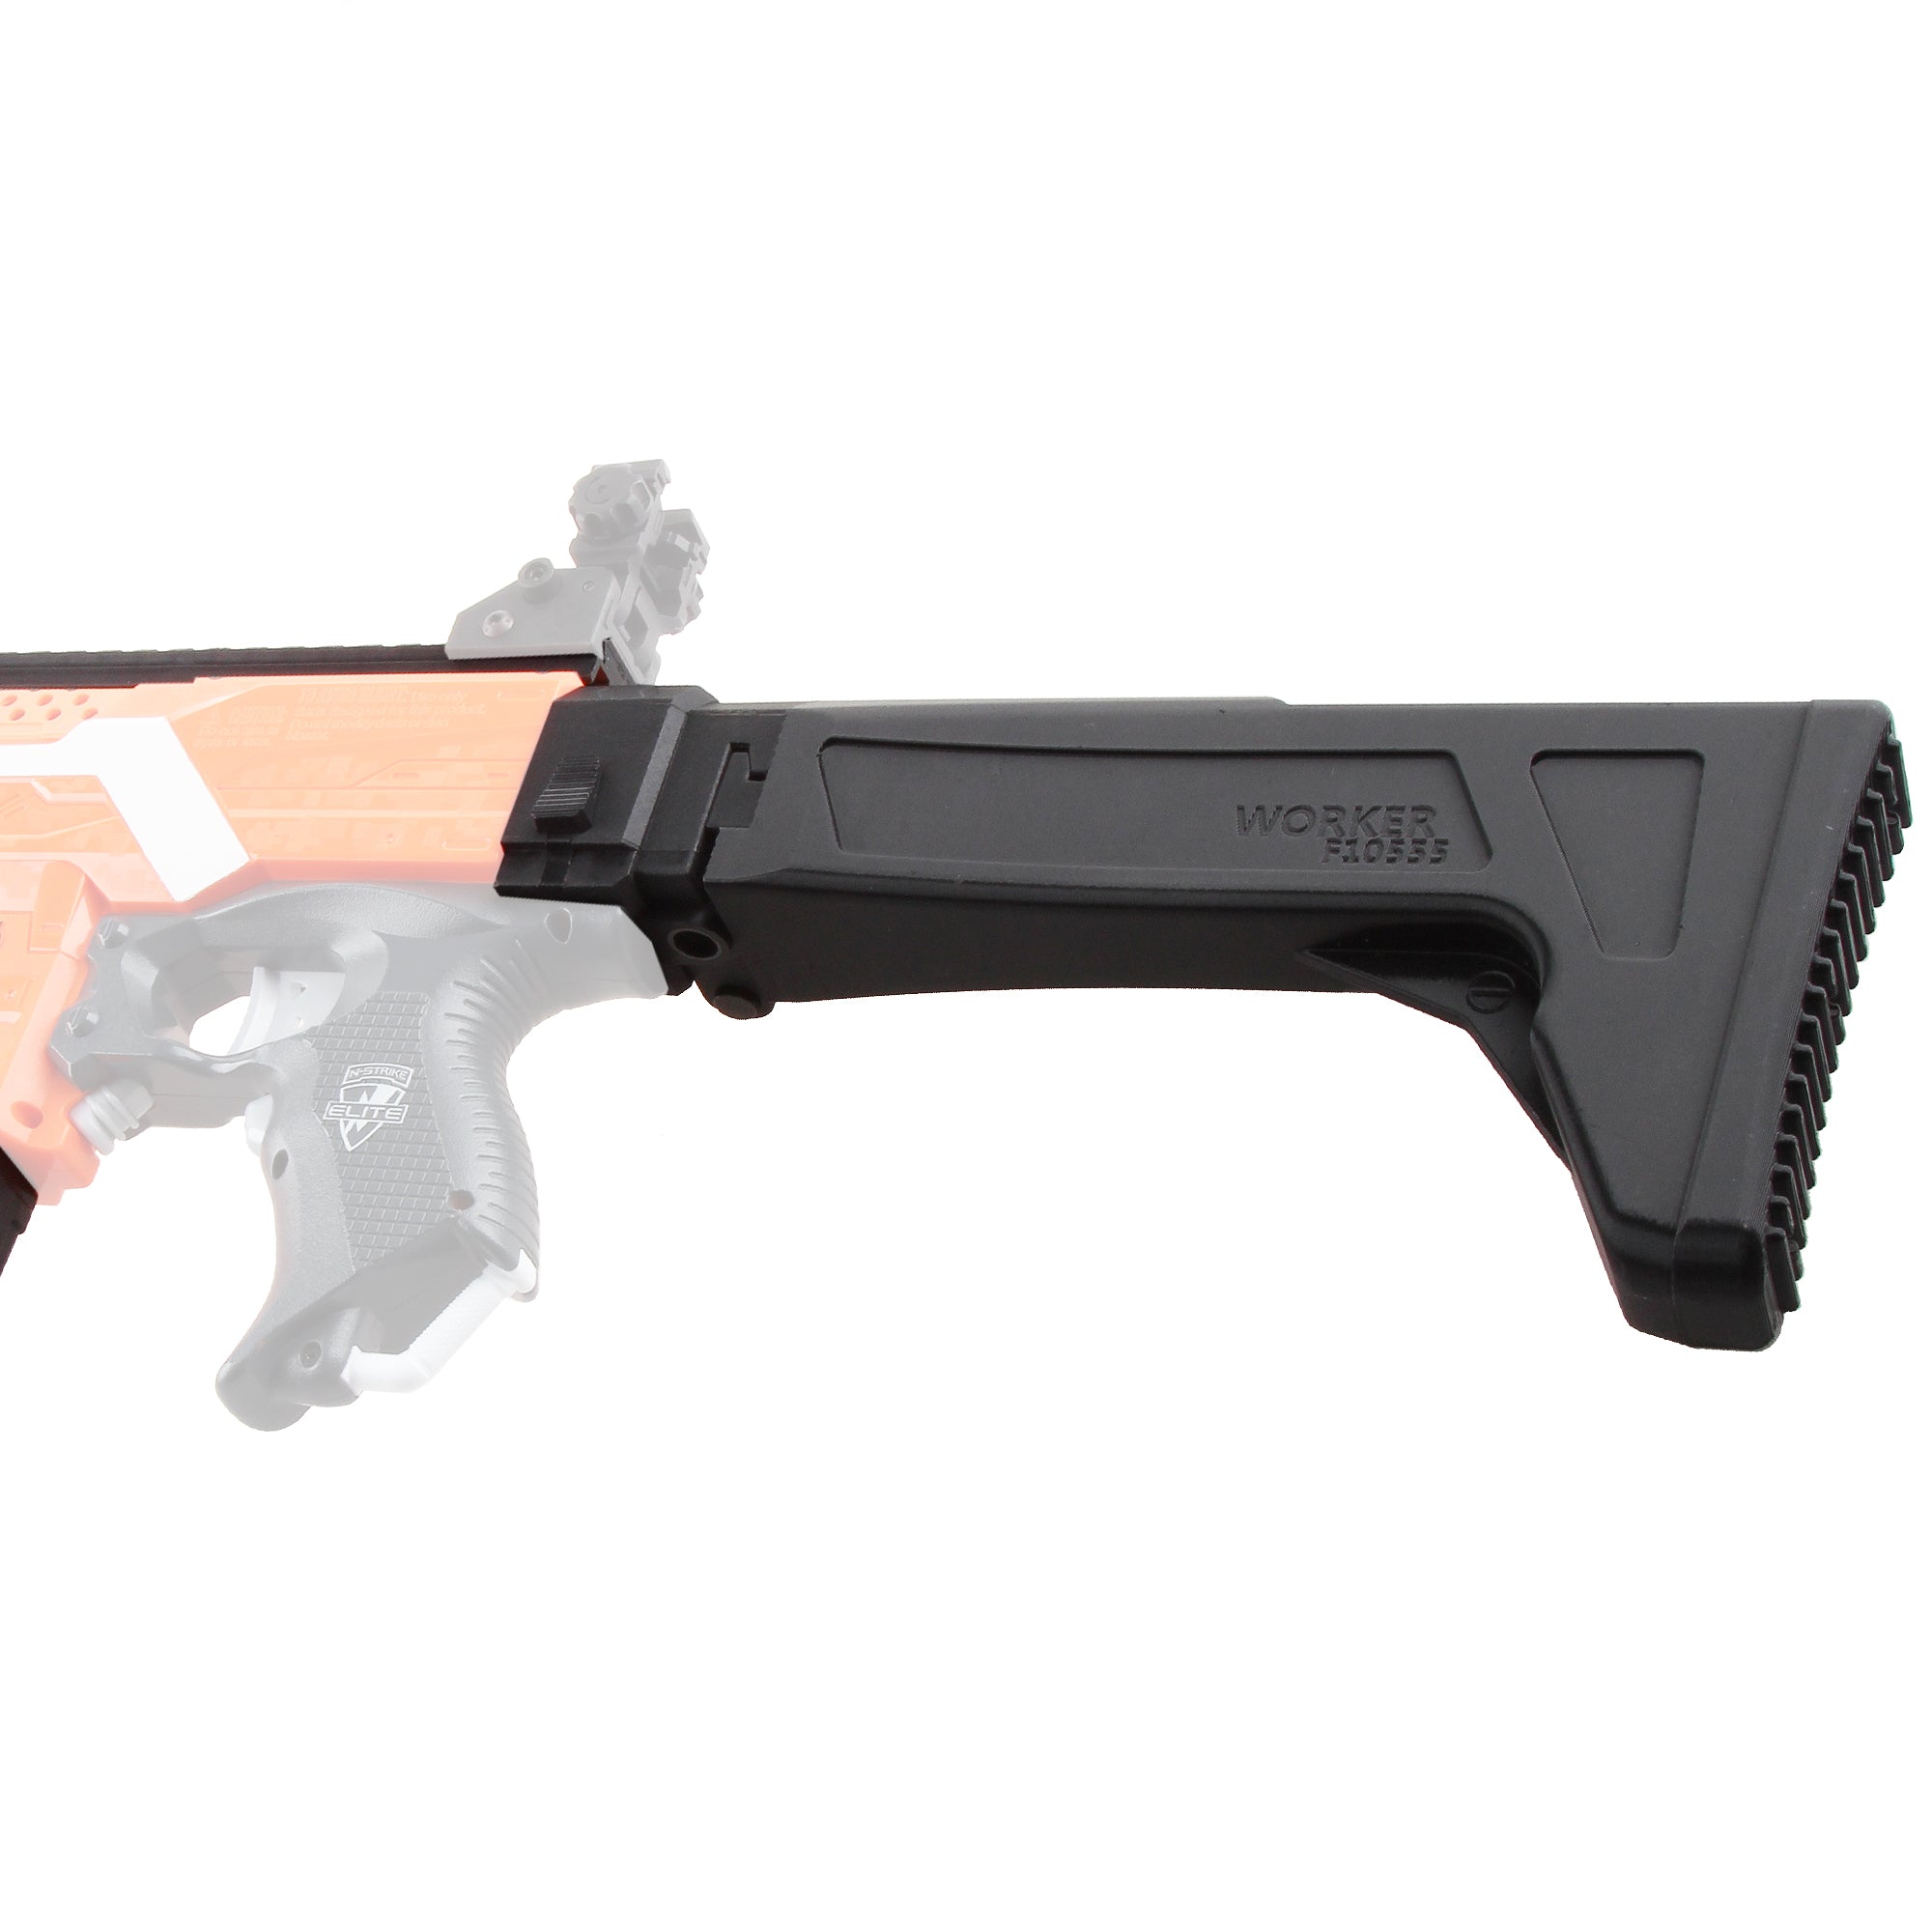 Worker Mod DIY Imitation DMR Kits C (SAF-200 Stock) Combo 11 Items for Nerf Stryfe Modify Toy - BlasterMOD